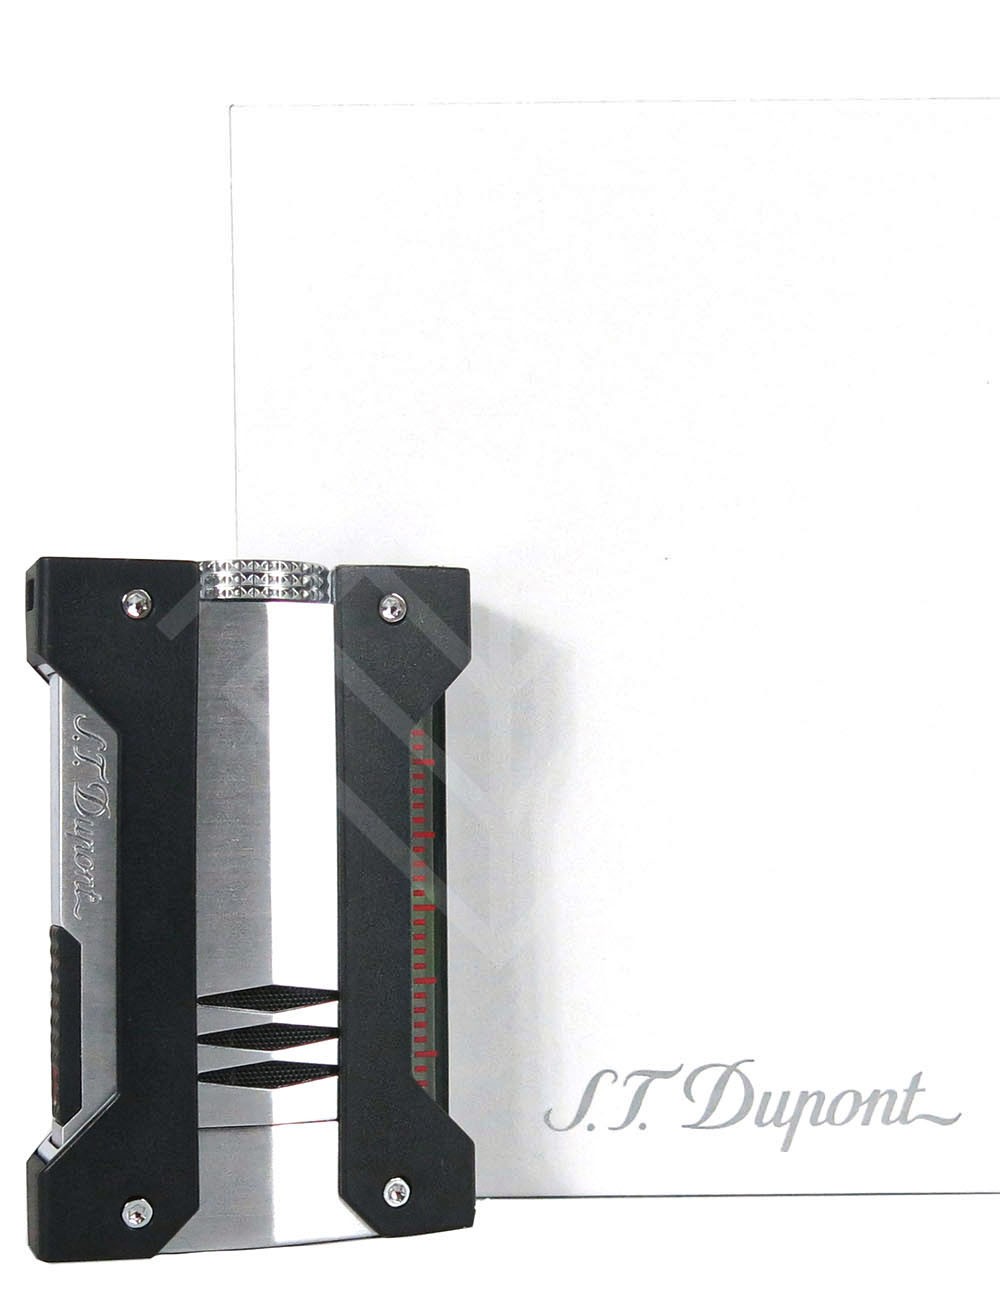 Зажигалка DUPONT DEFI EXTREME chrome brushed/black